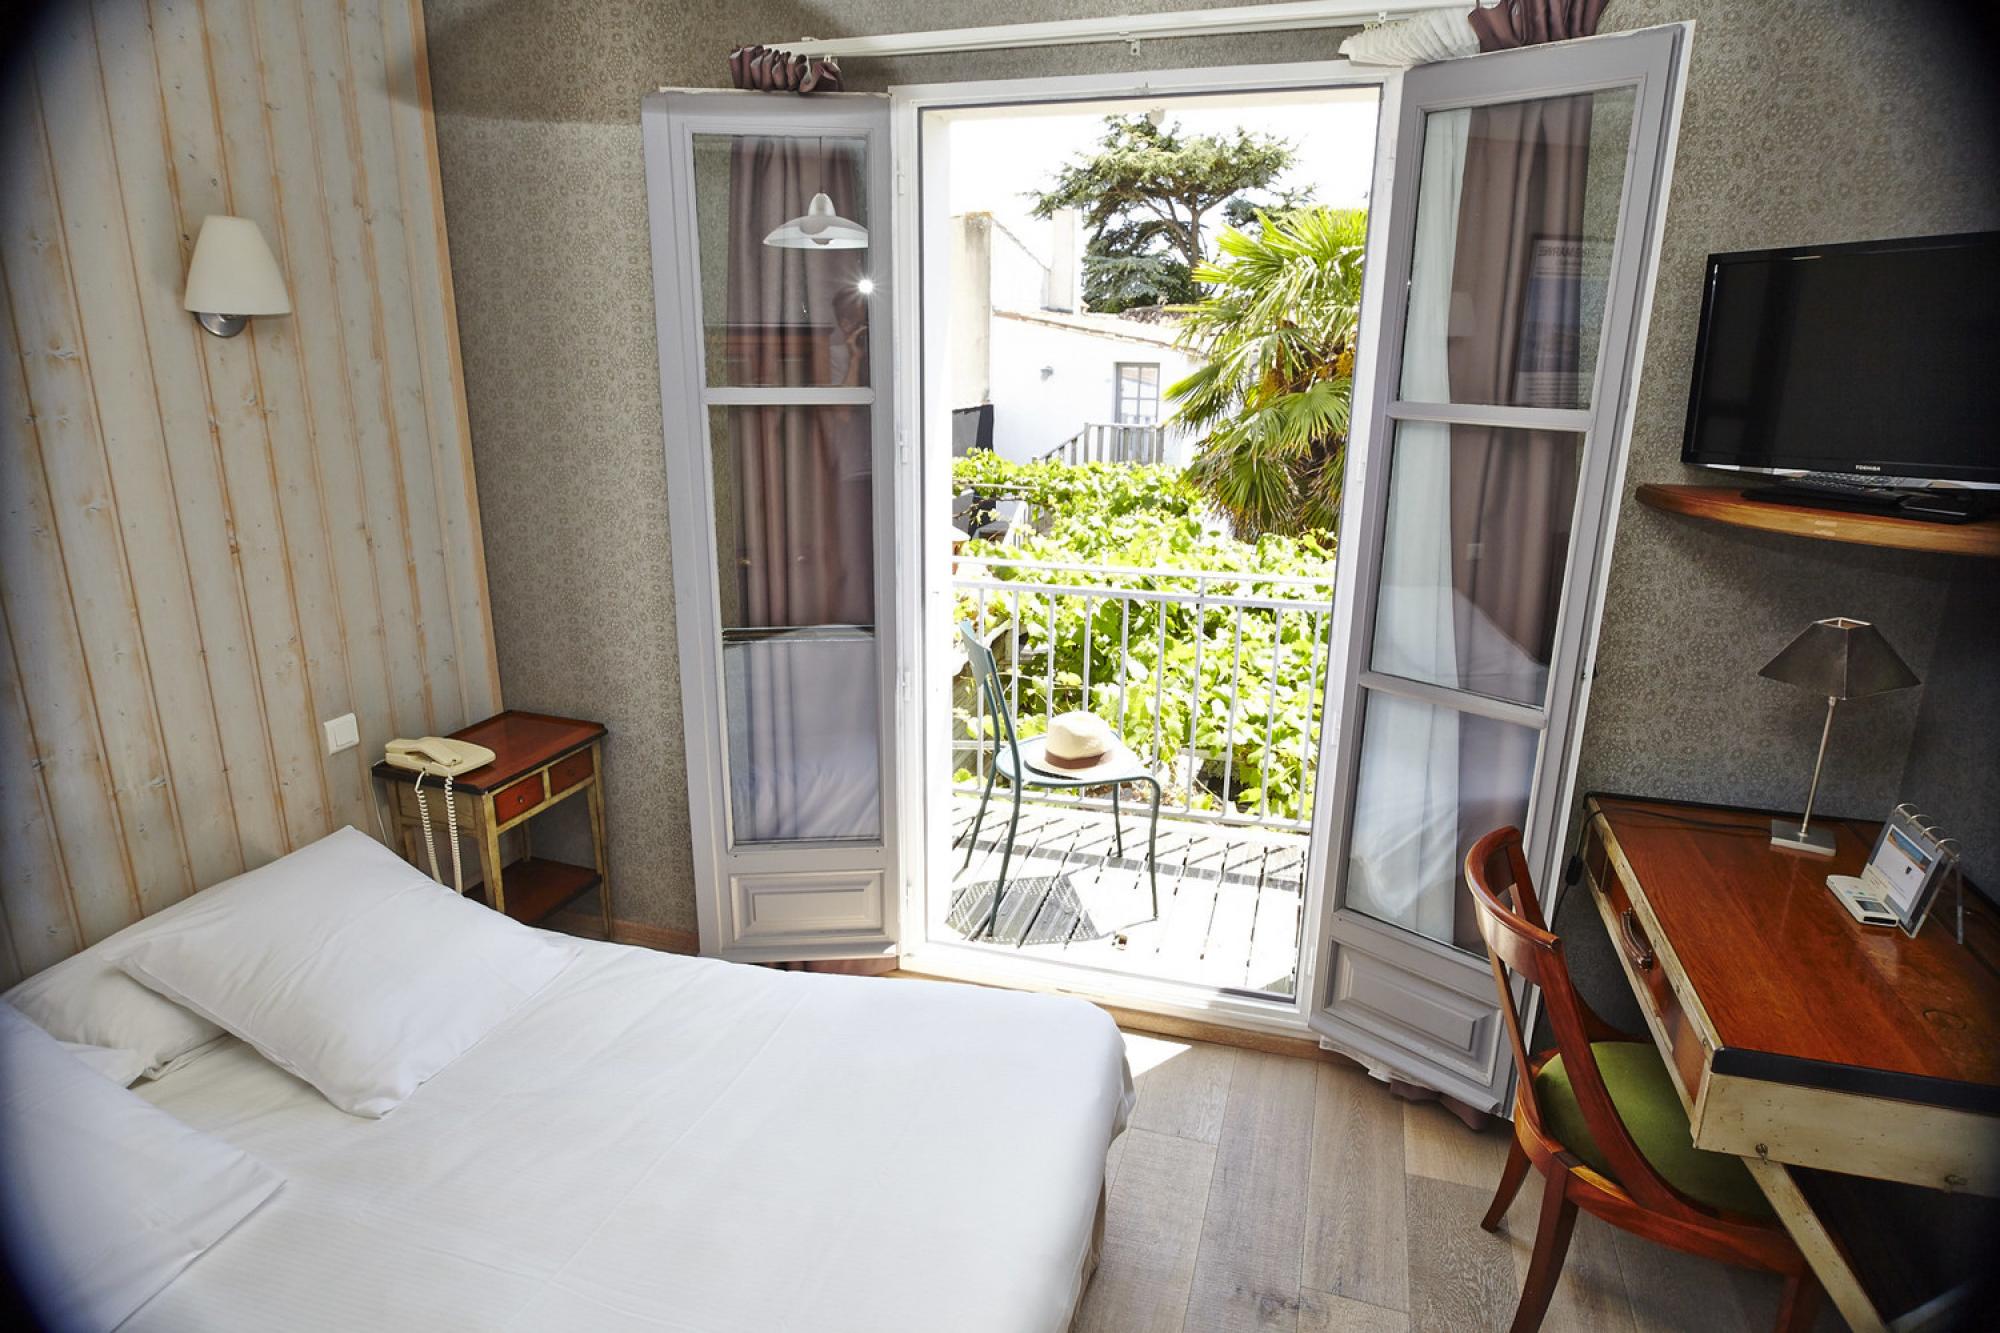 Standard hotel rooms : Hotel *** Le Vieux GrÃ©ement in La Couarde-sur-Mer (Island of RÃ©)